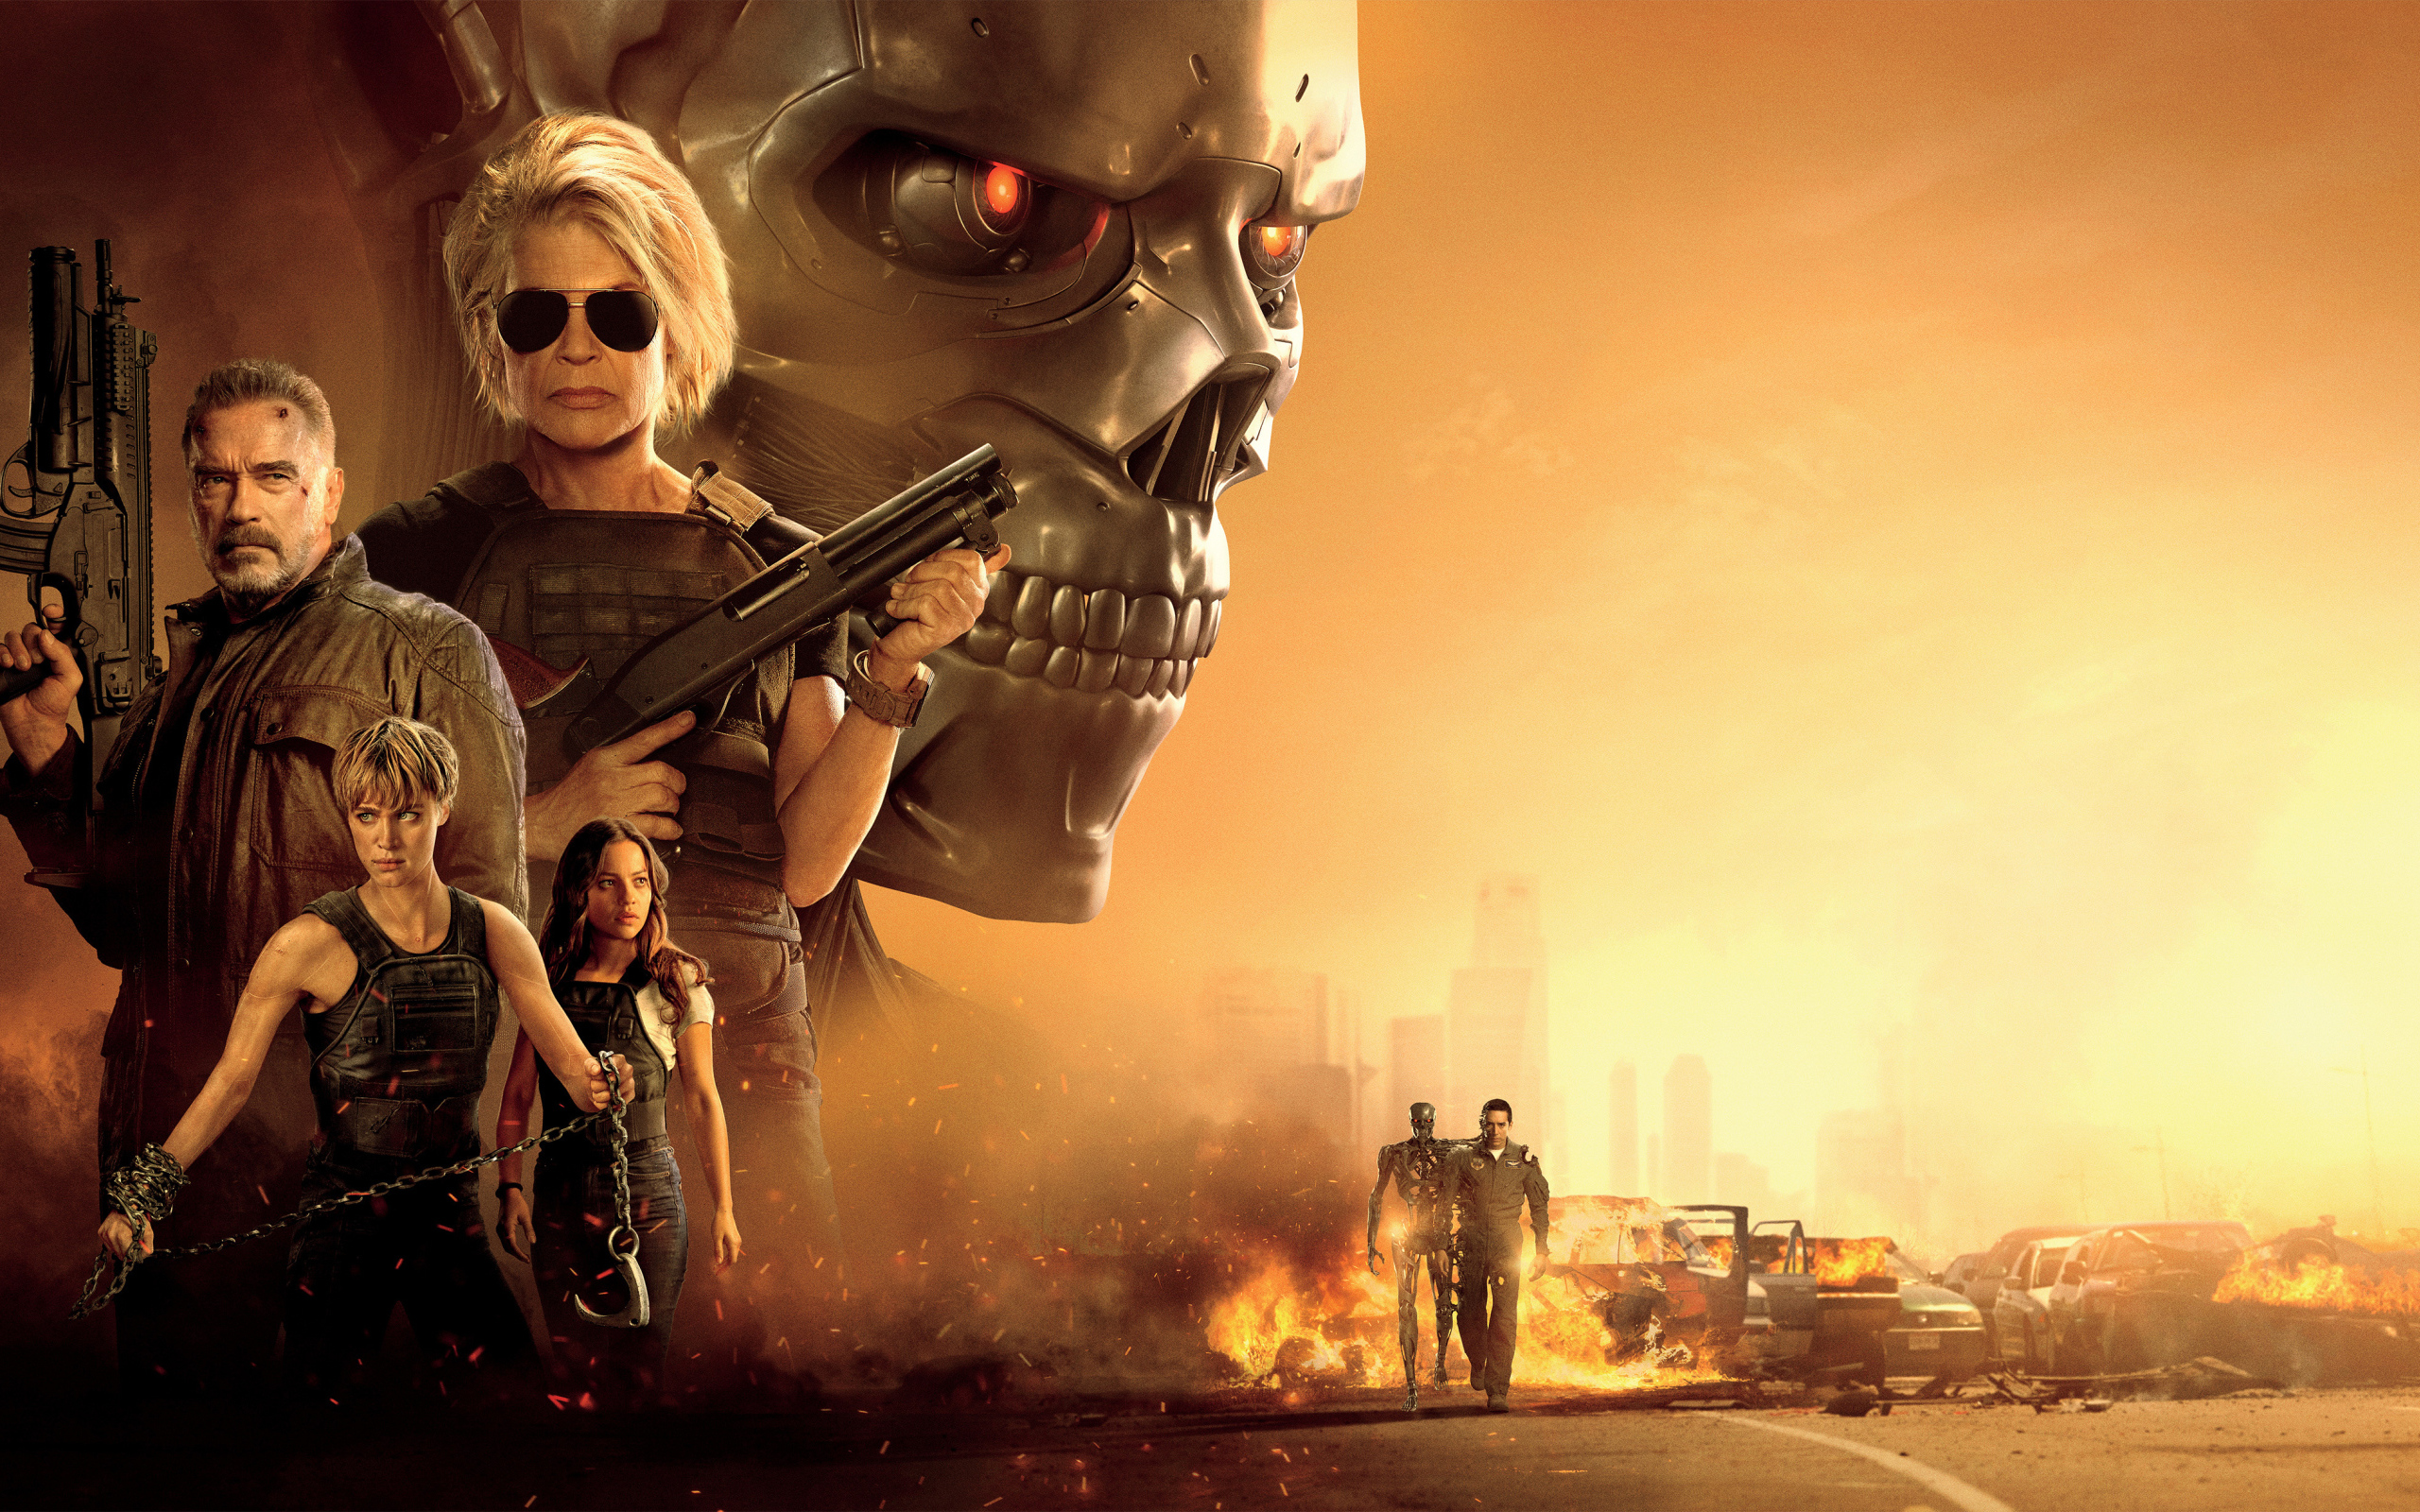 Poster for the new movie Terminator: Dark Fate, 2020